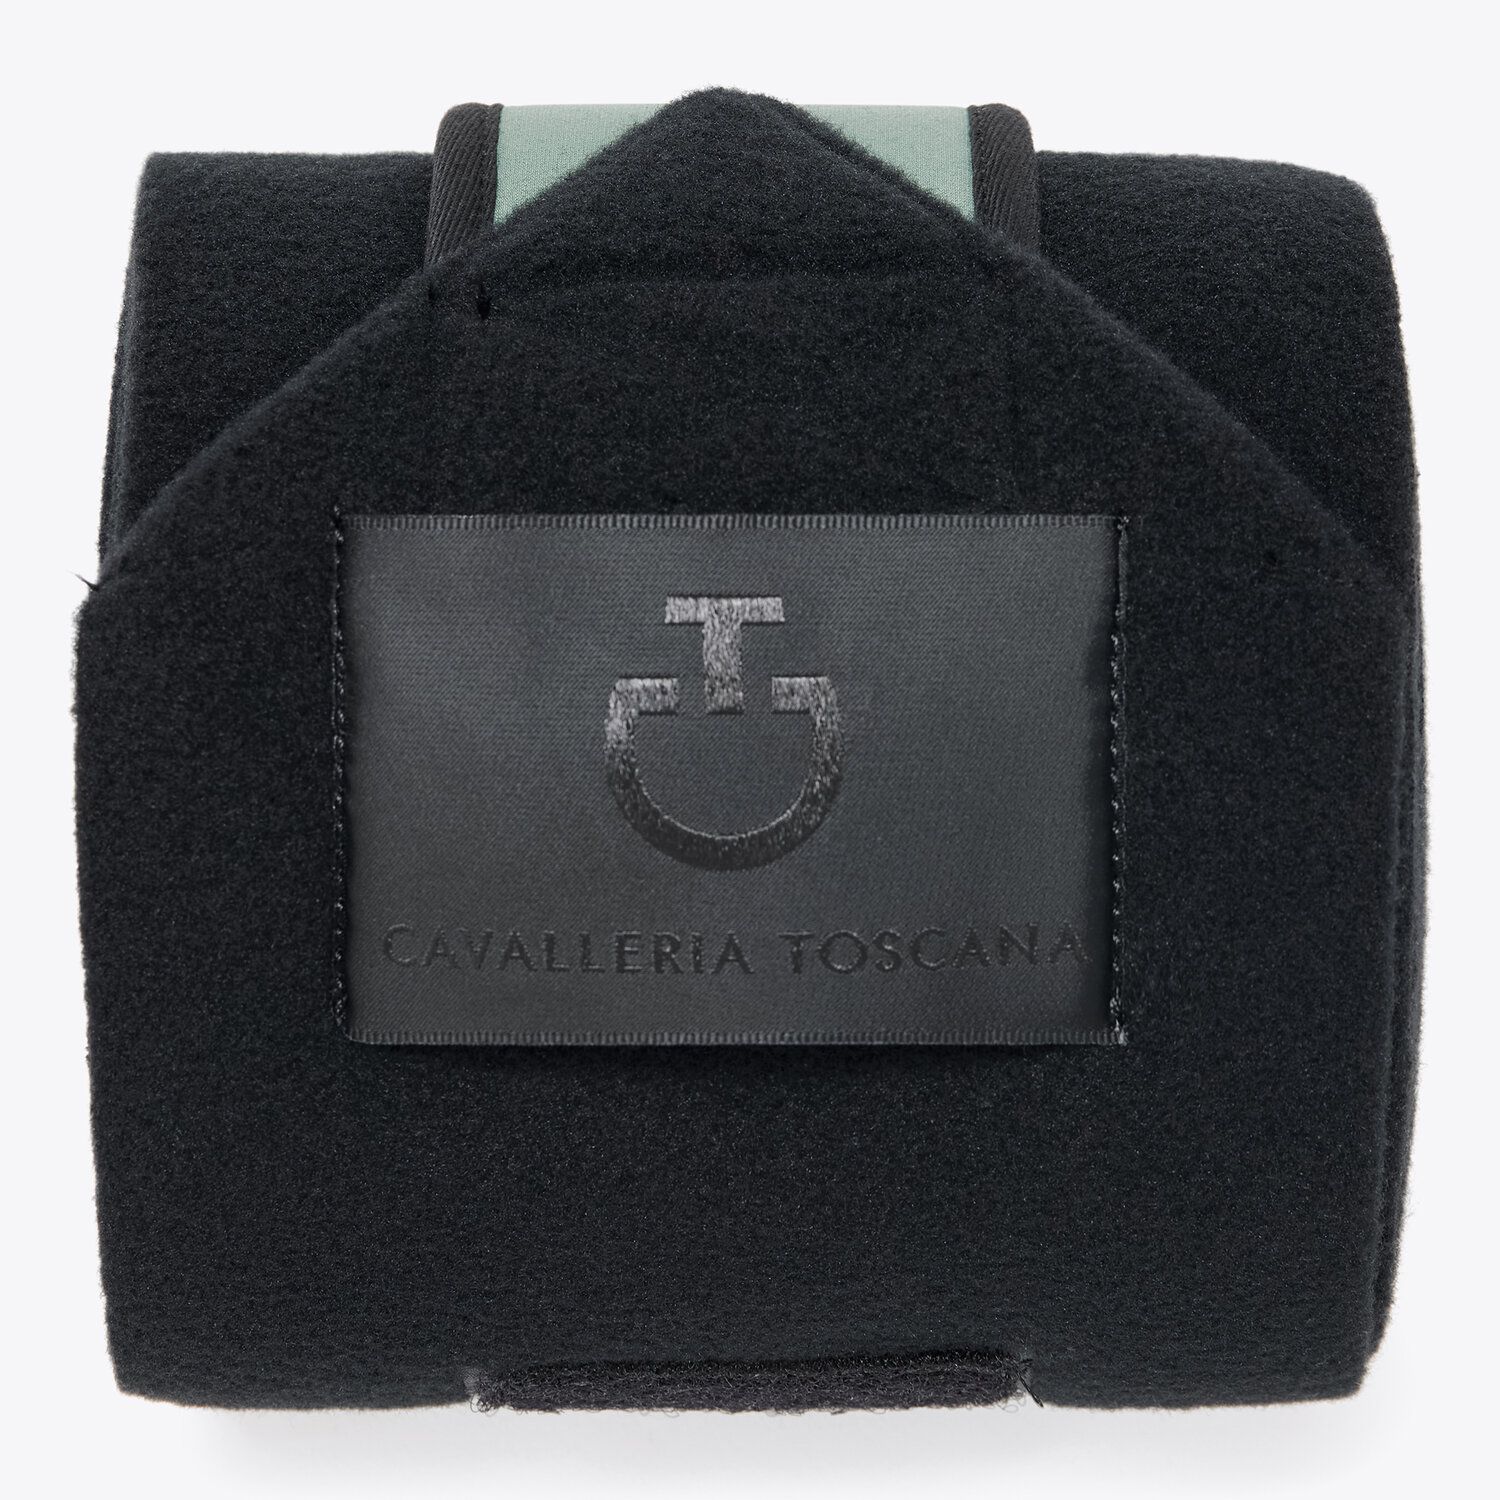 Cavalleria Toscana Set of 4 jersey and fleece bandages BLACK/Emerald Grey-3